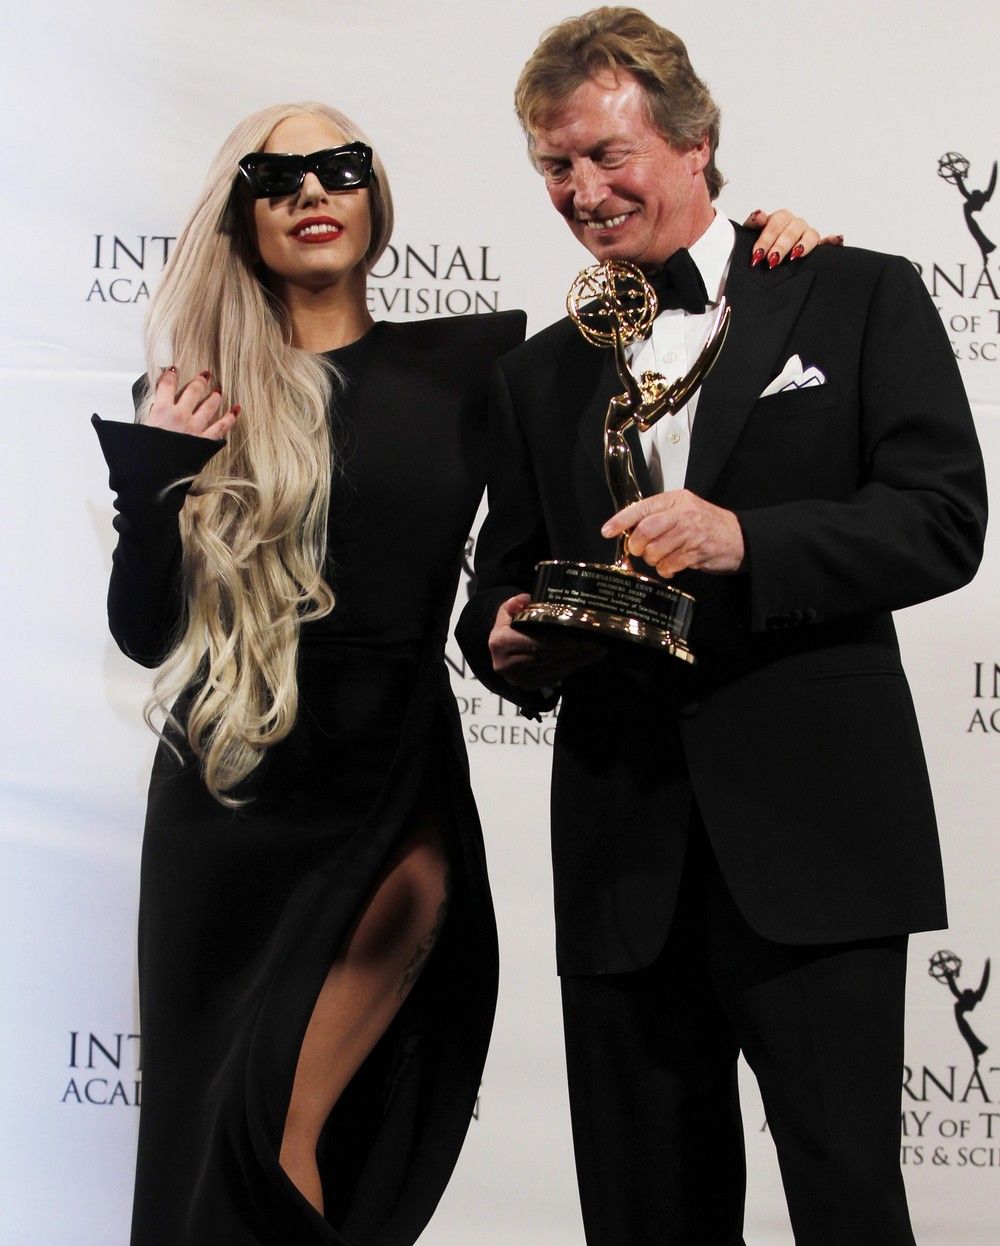 International Emmy 2011